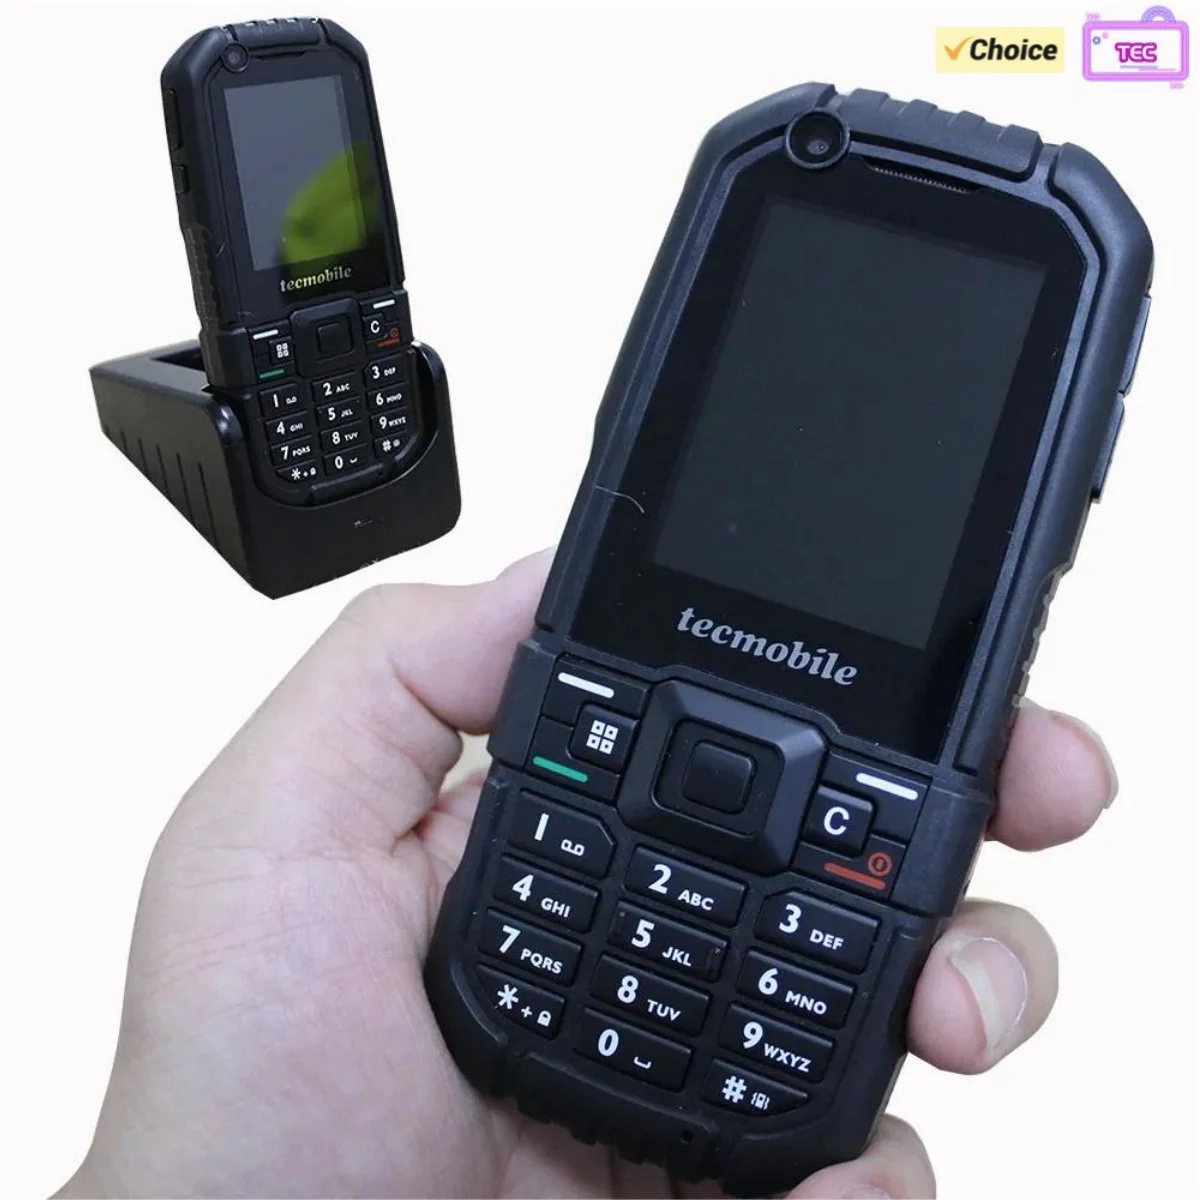 Tecmobile TEC Waterproof Keyboard Cellphone1800mAh MP3 SOS Botton Front Rear Camera Strong Flashlight Mobile Phone